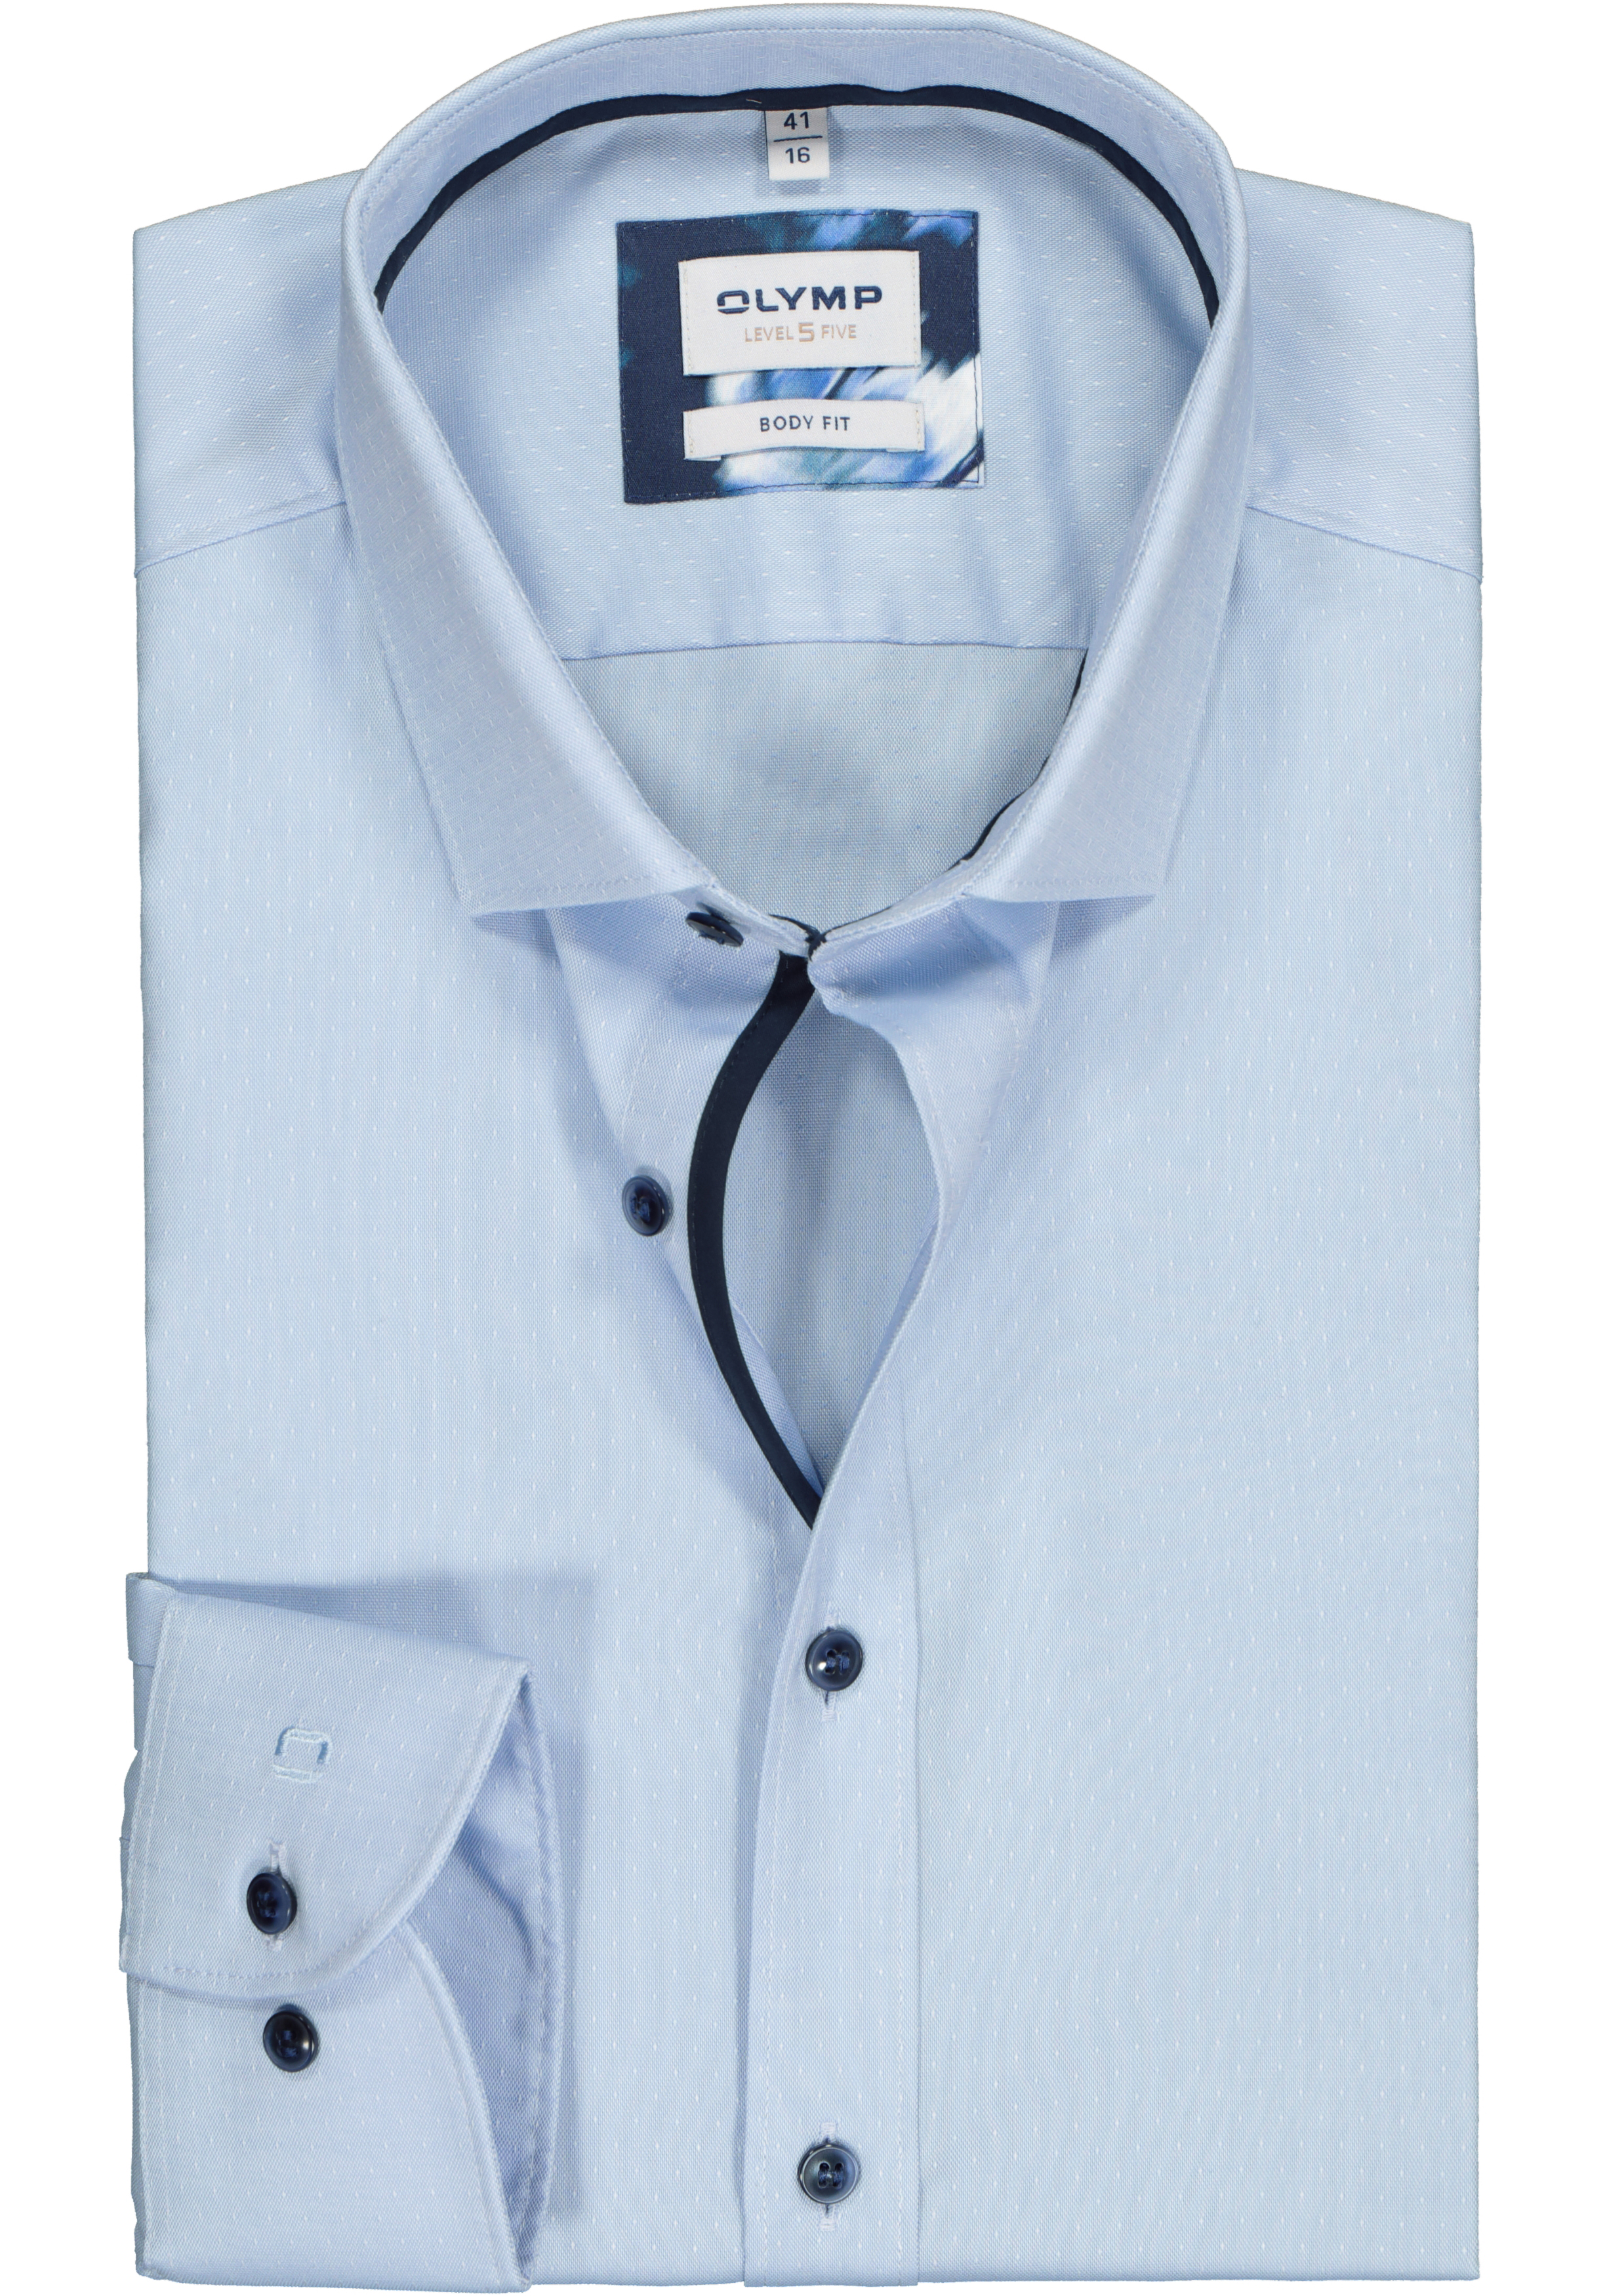 OLYMP Level 5 body fit overhemd, Oxford, lichtblauw mini dessin (contrast)